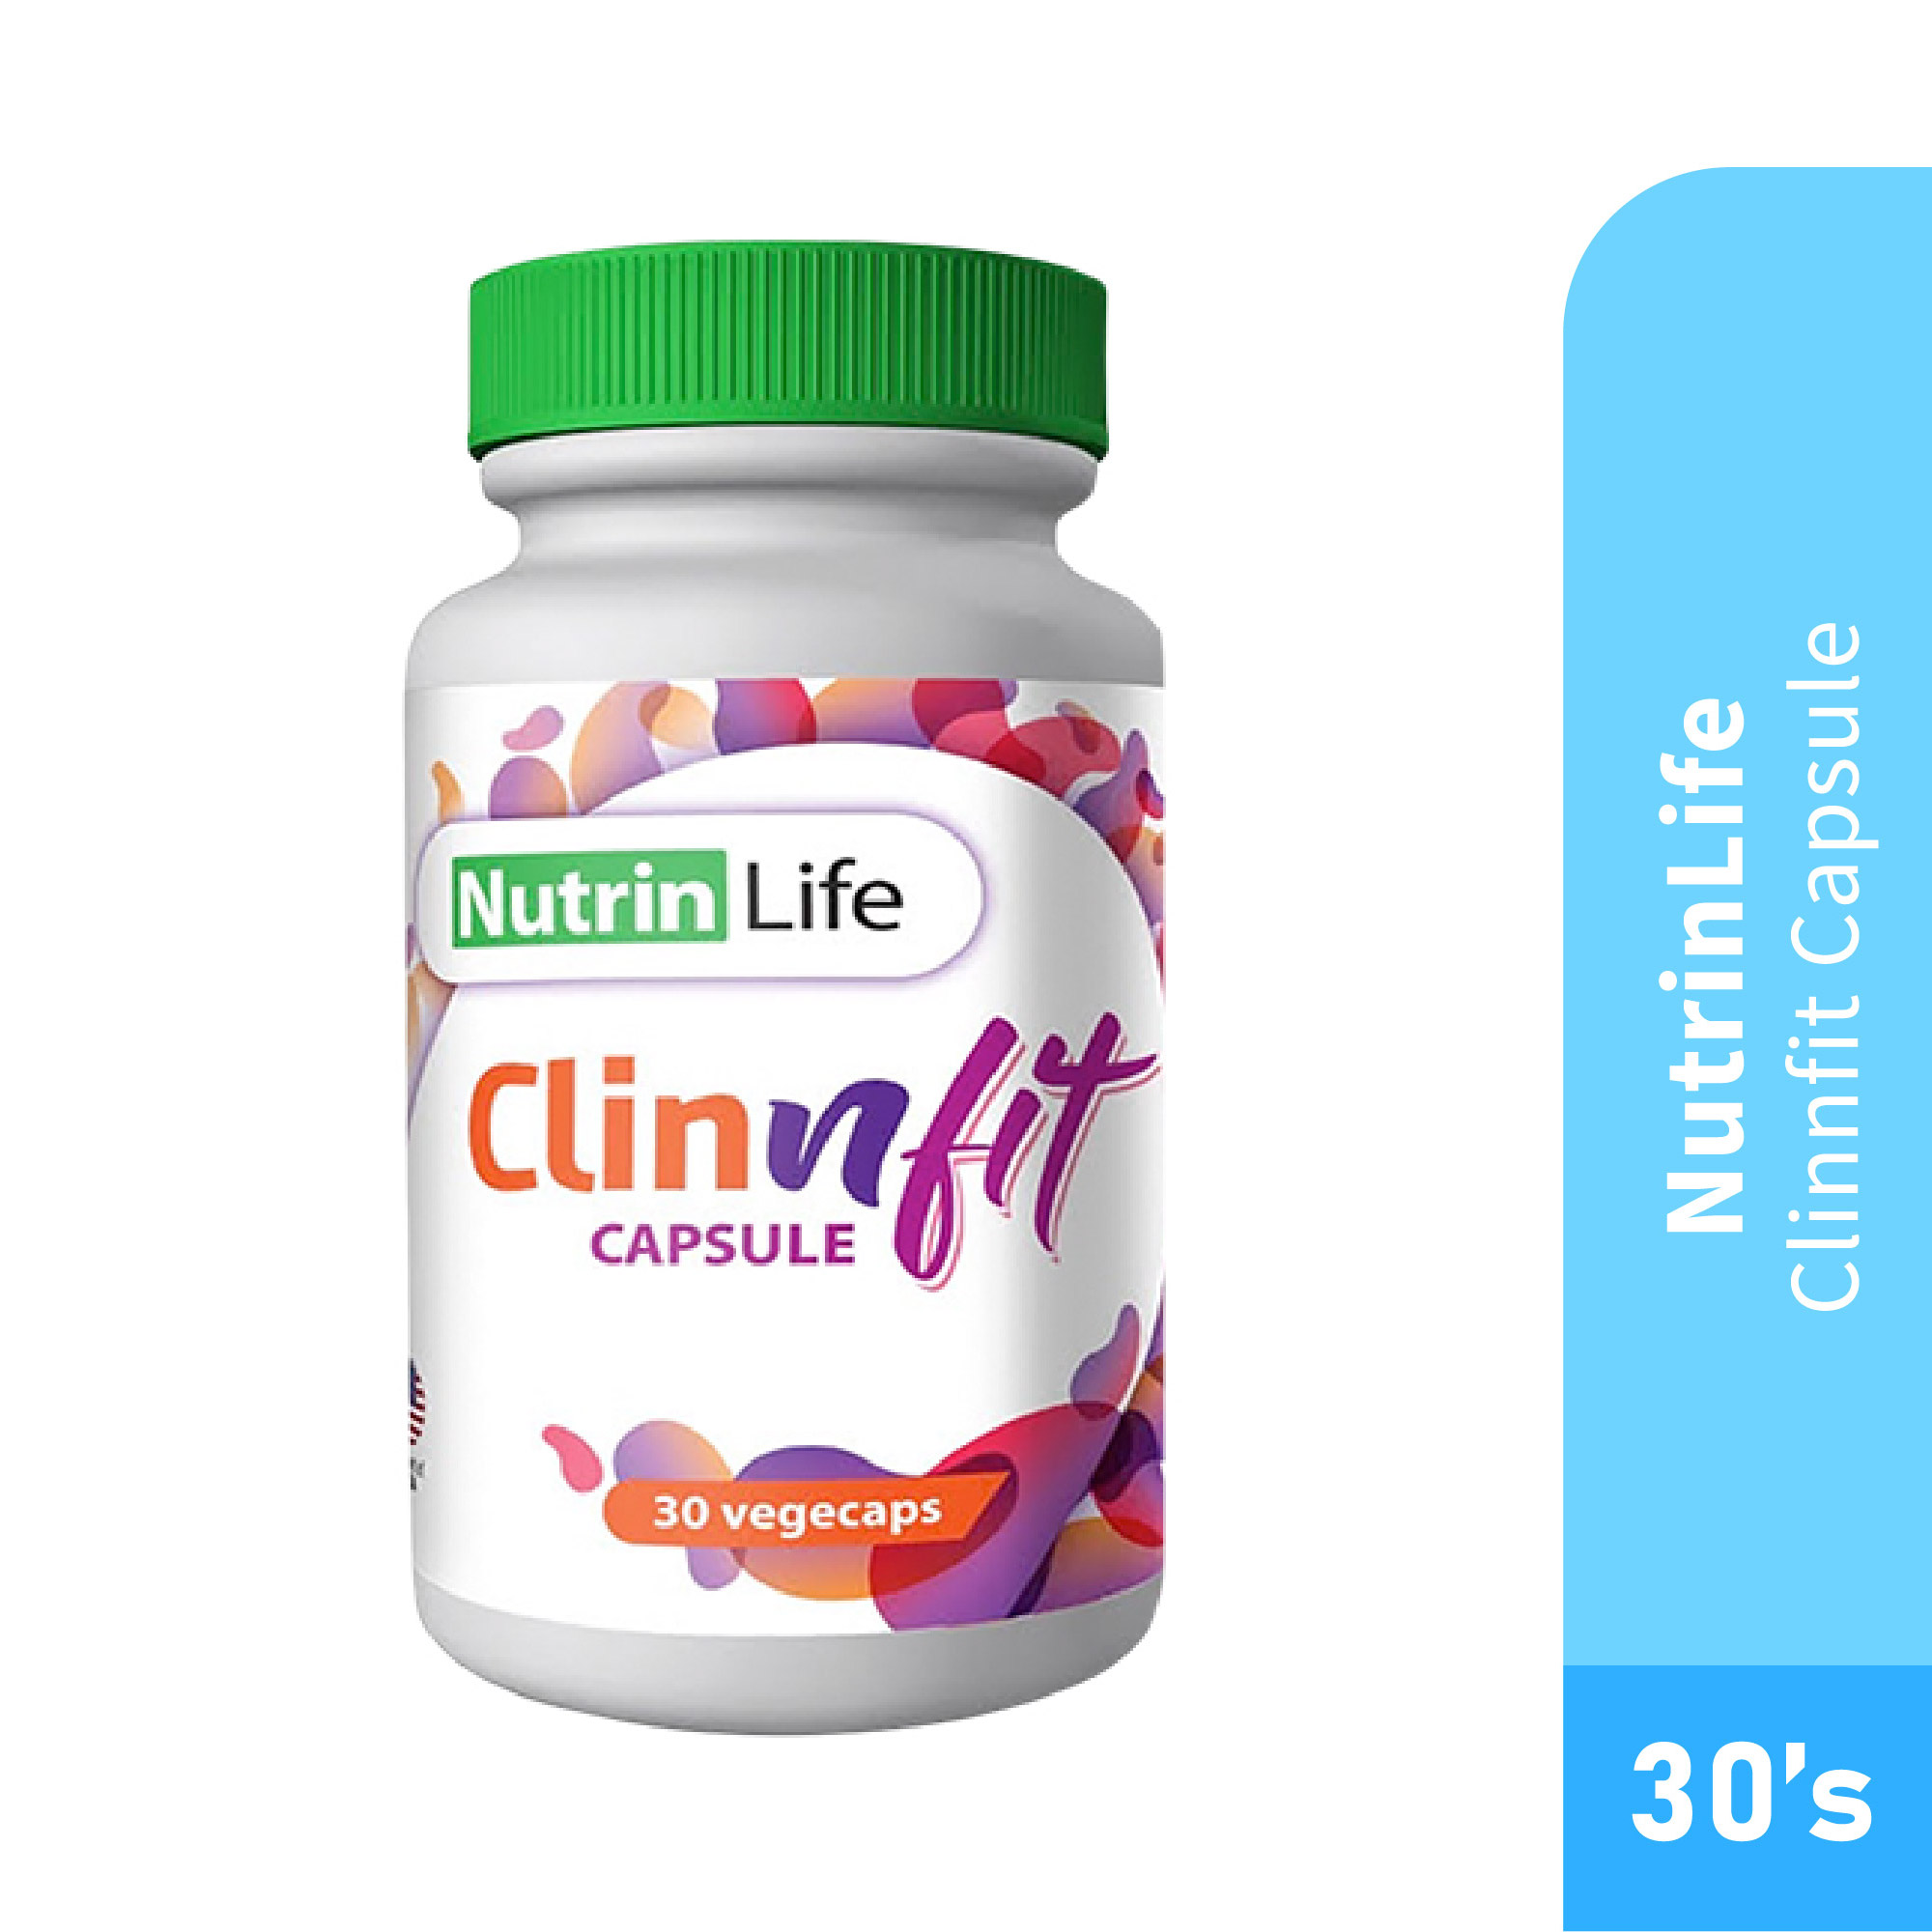 NutrinLife Clinnfit 30's